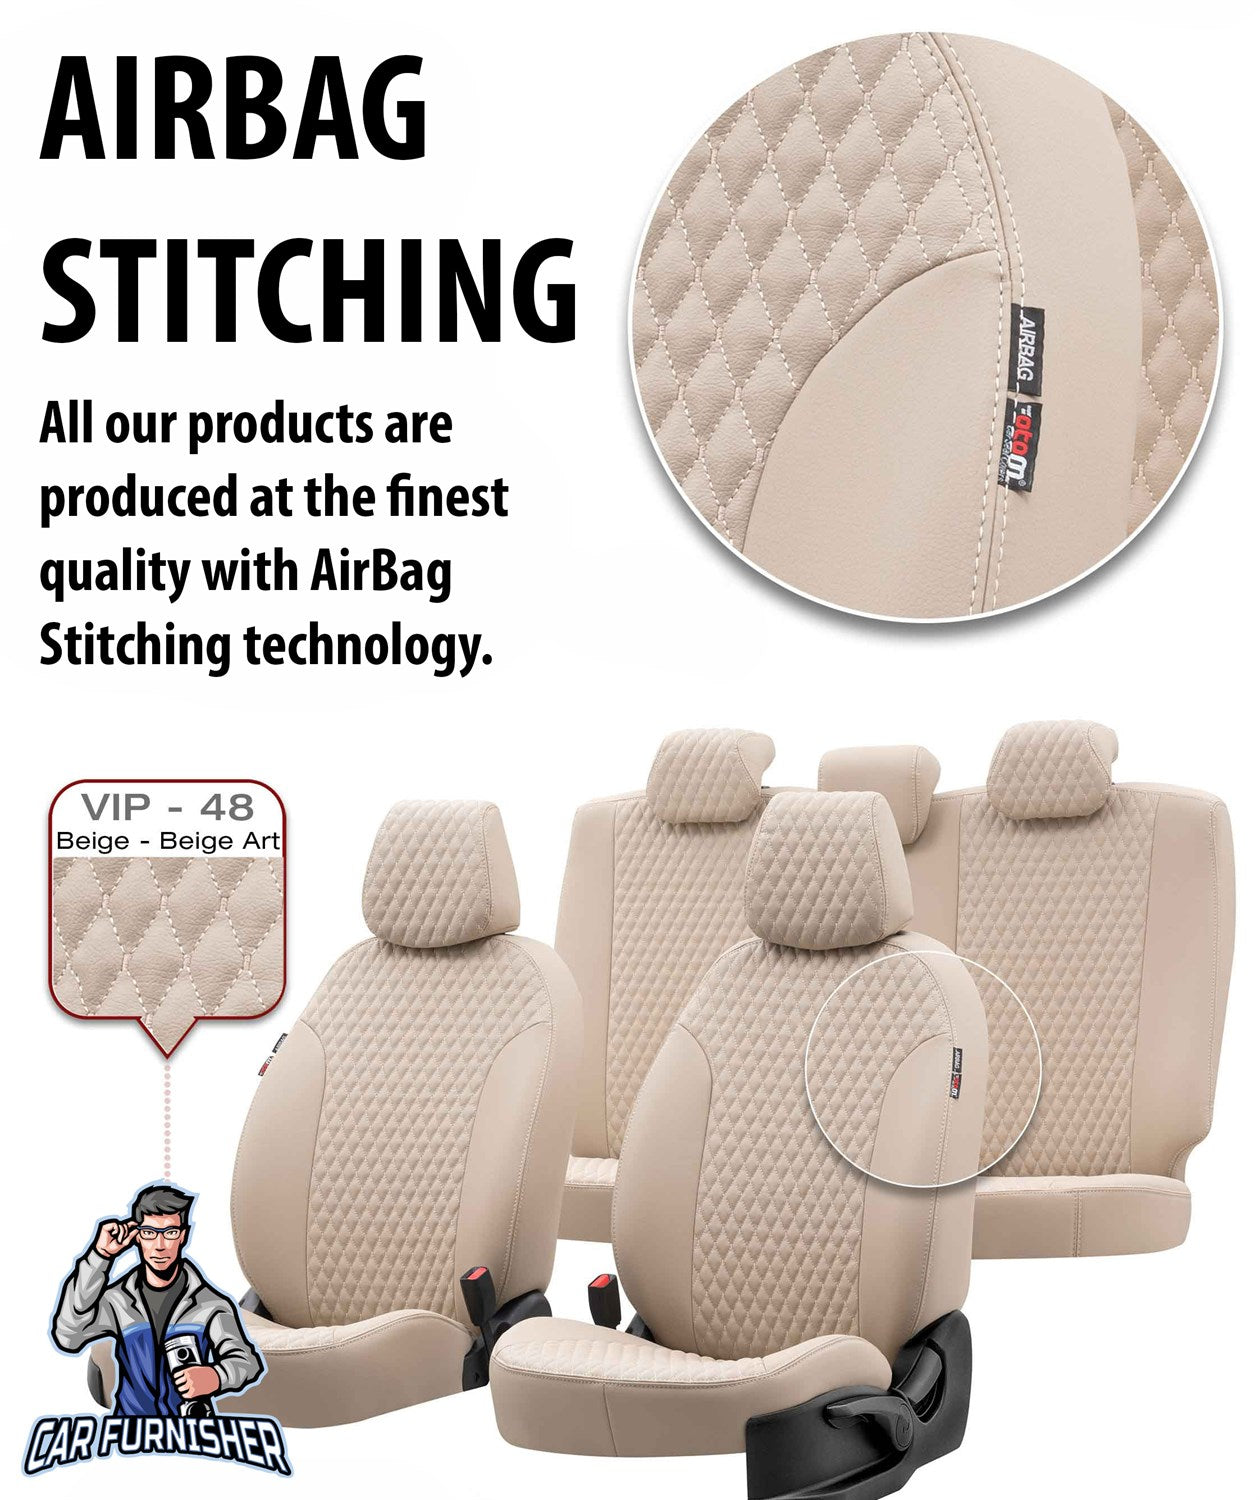 Suzuki Jimny Seat Covers Amsterdam Leather Design Dark Gray Leather